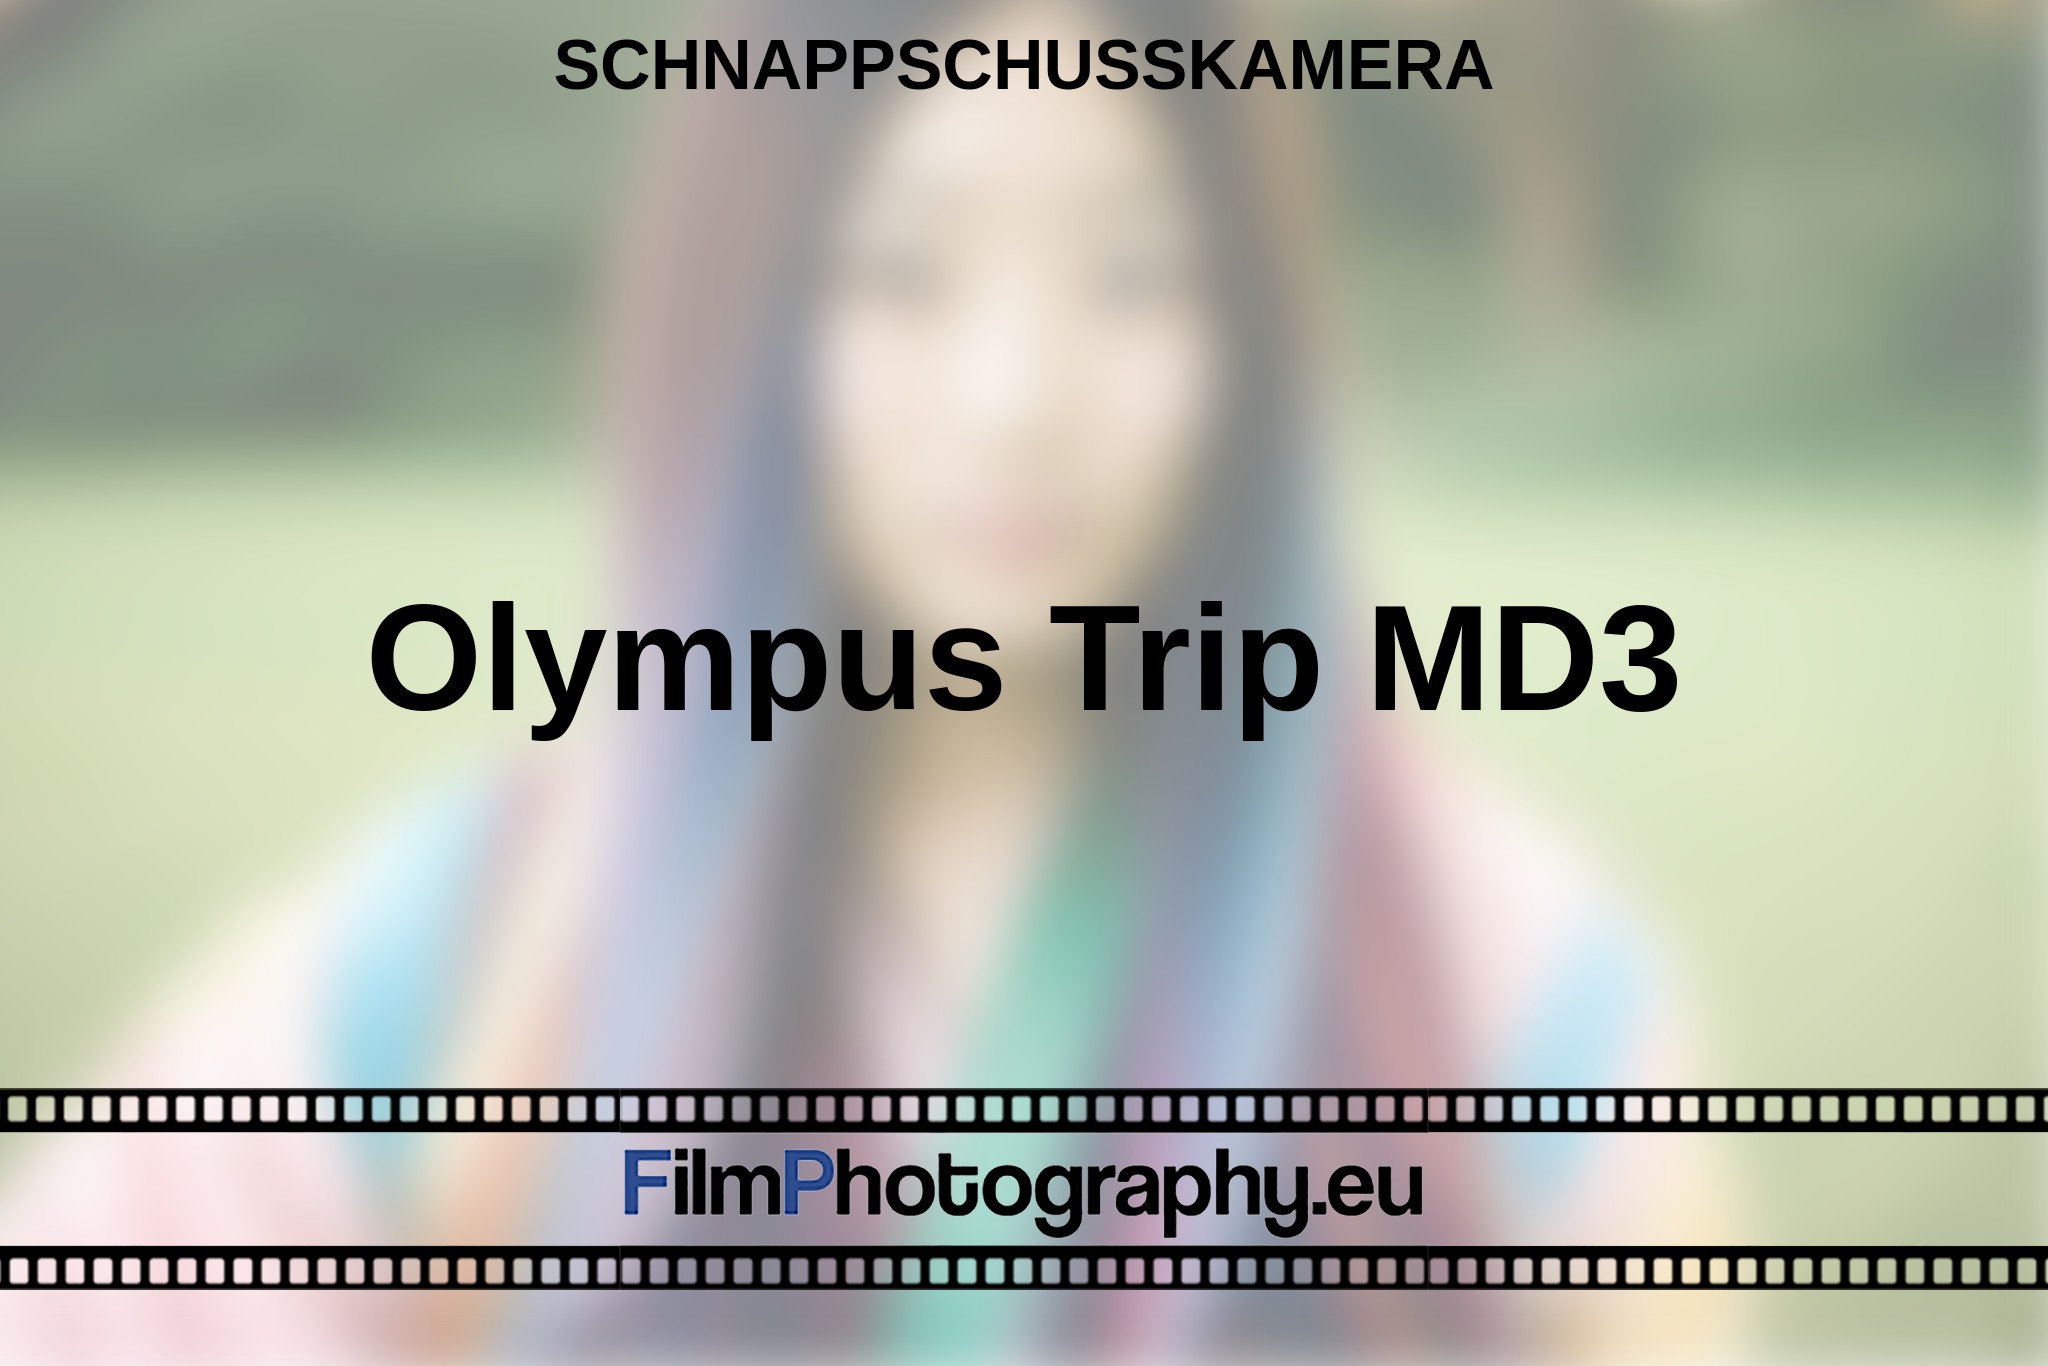 olympus-trip-md3-schnappschusskamera-bnv.jpg